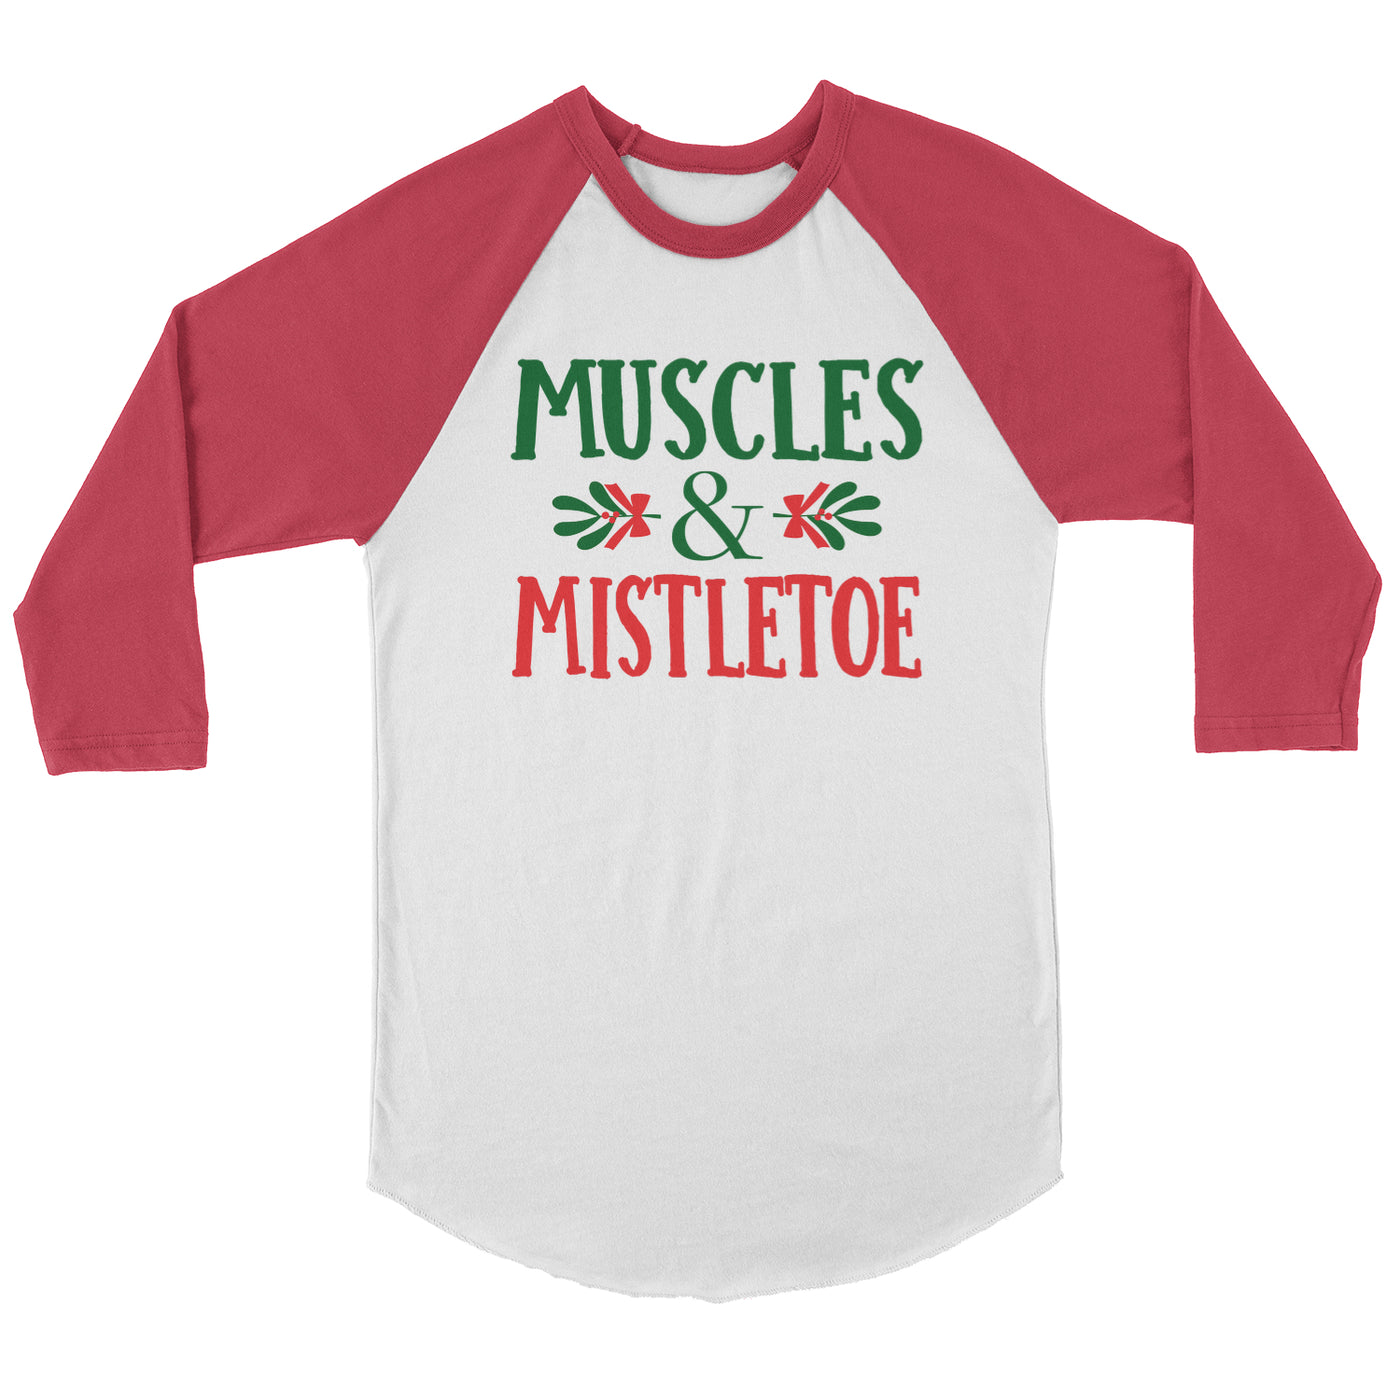 Muscles and Mistletoe Raglan